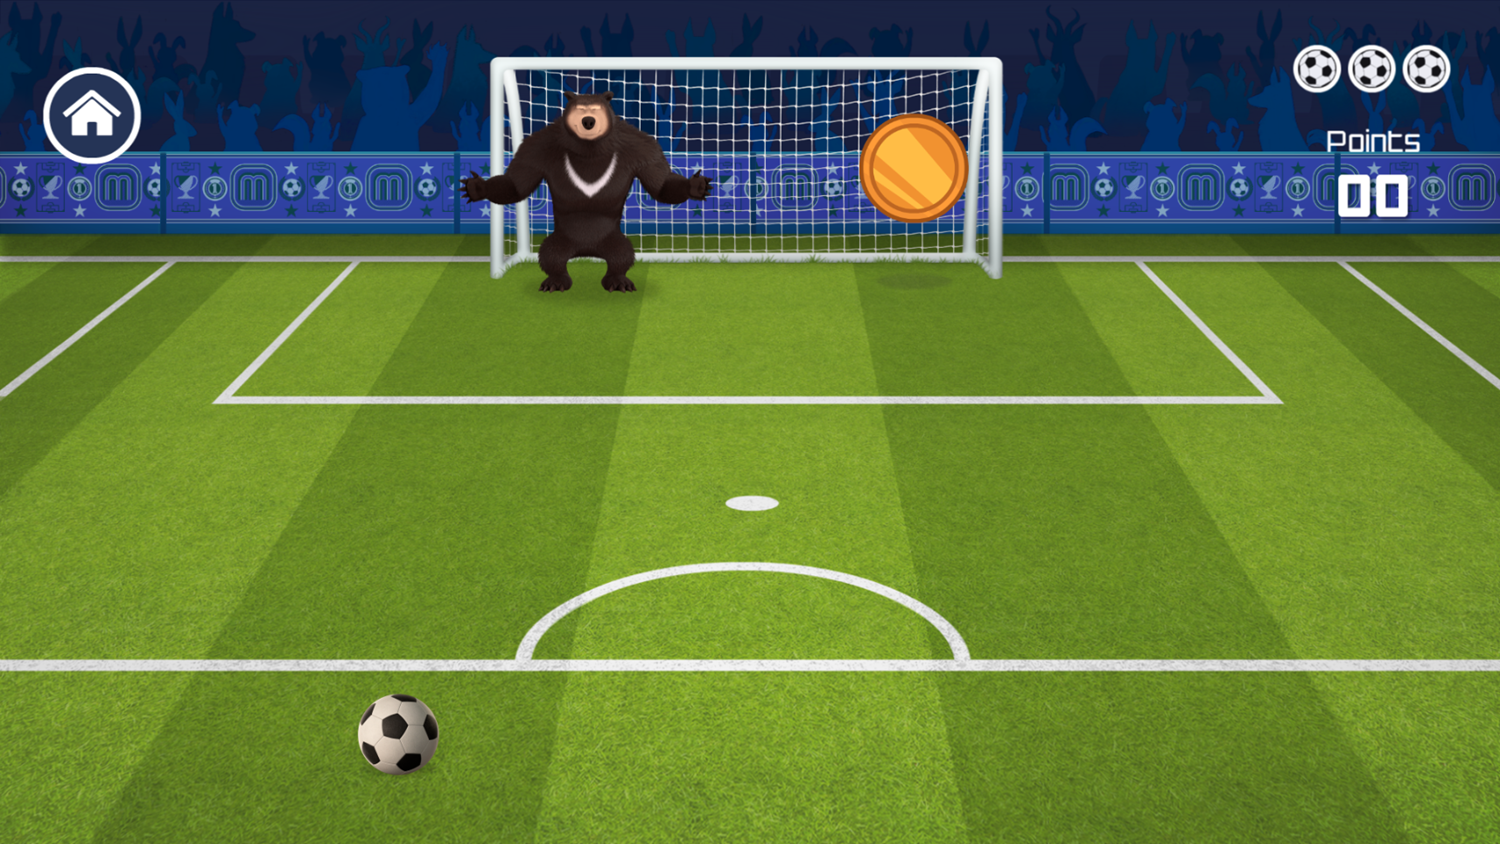 Masha and the Bear Football Game Start Screenshot.